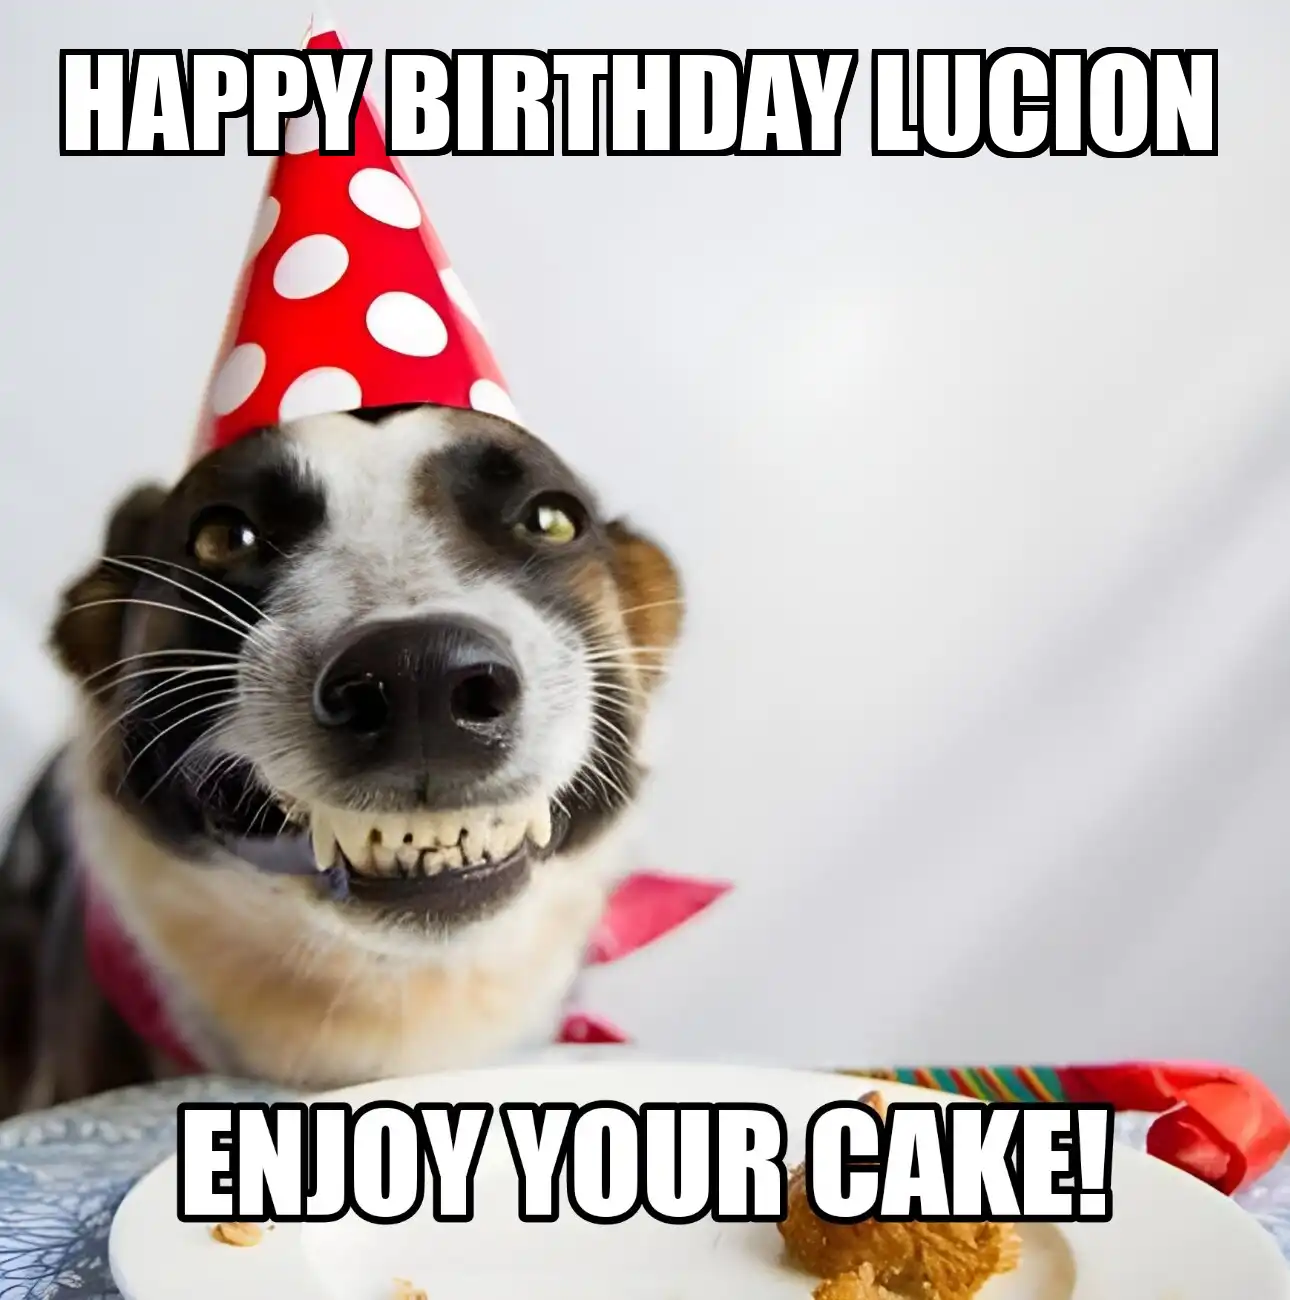 Happy Birthday Lucion Enjoy Your Cake Dog Meme